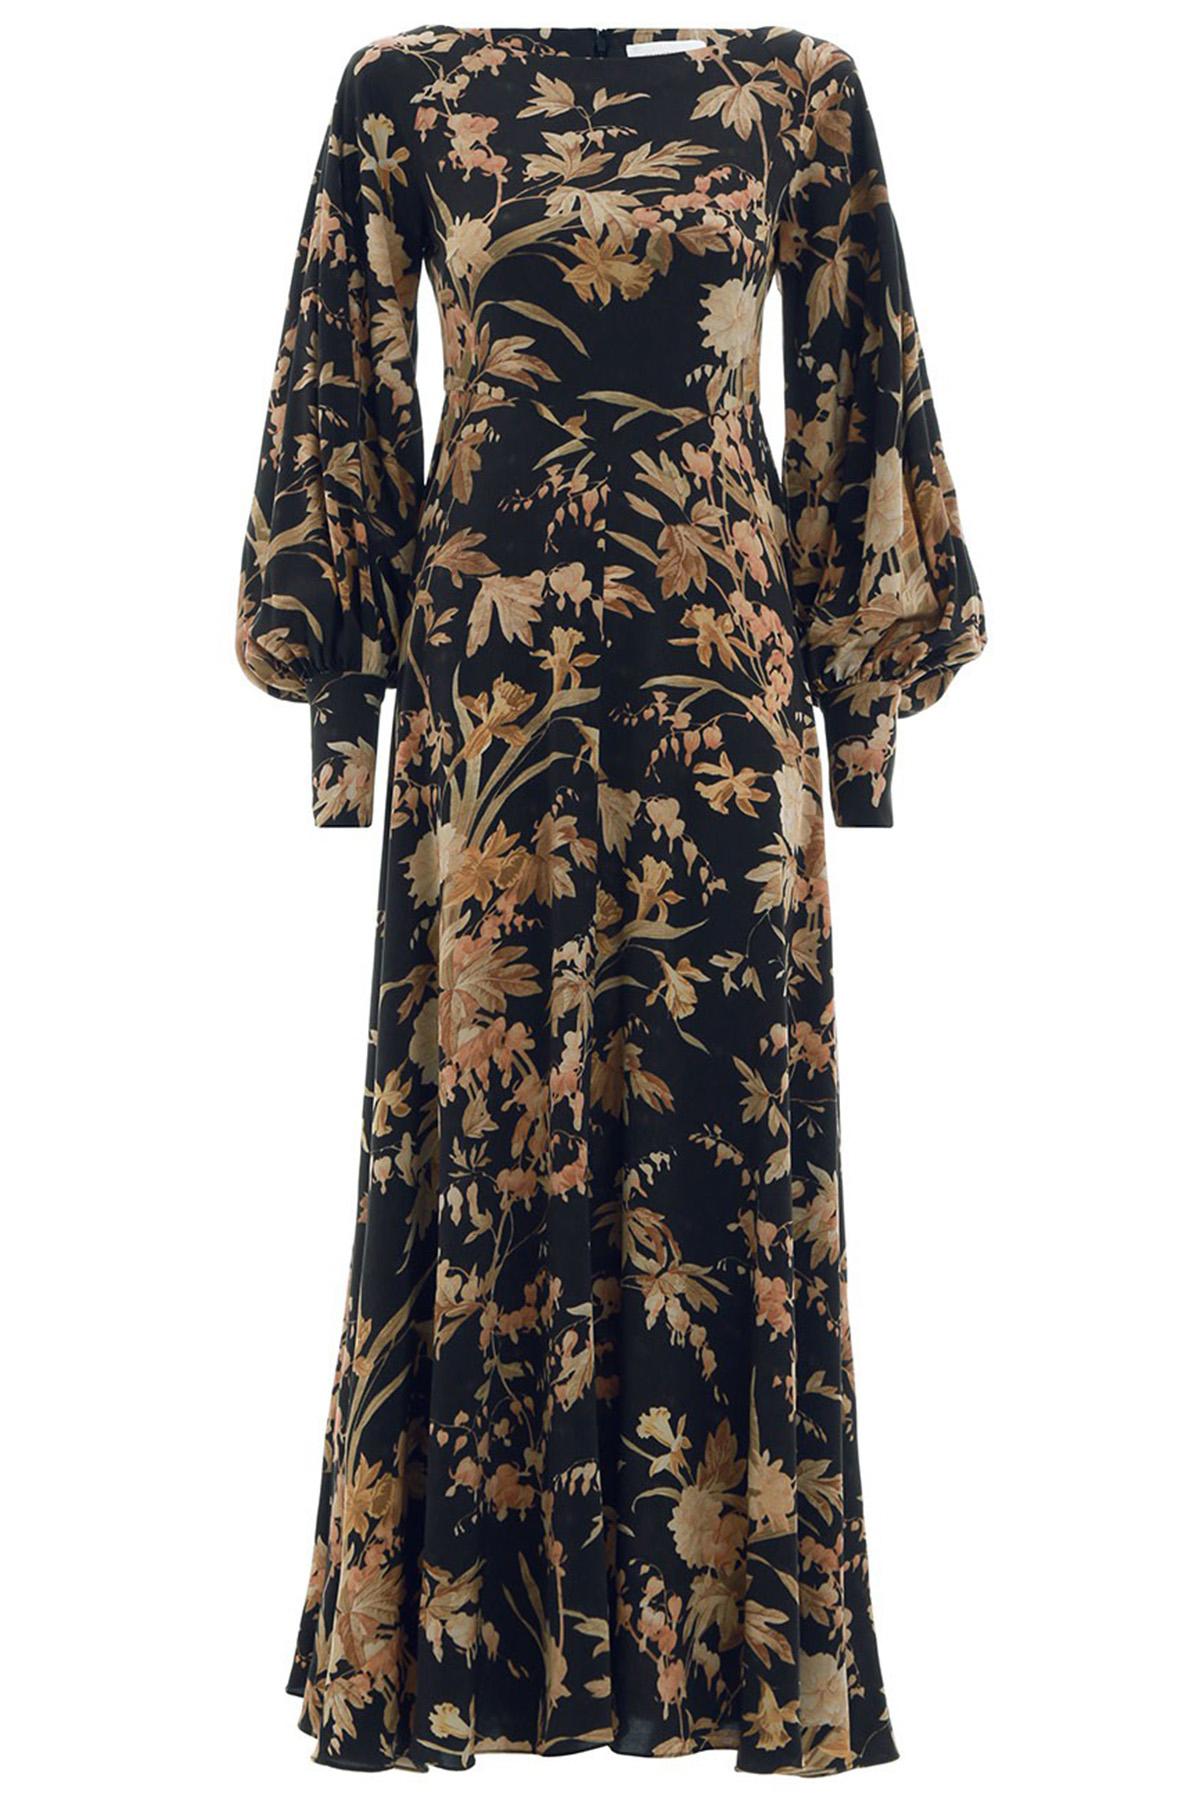 Zimmermann Unbridled Basque Dress In Black Jonquil Floral | Lyst